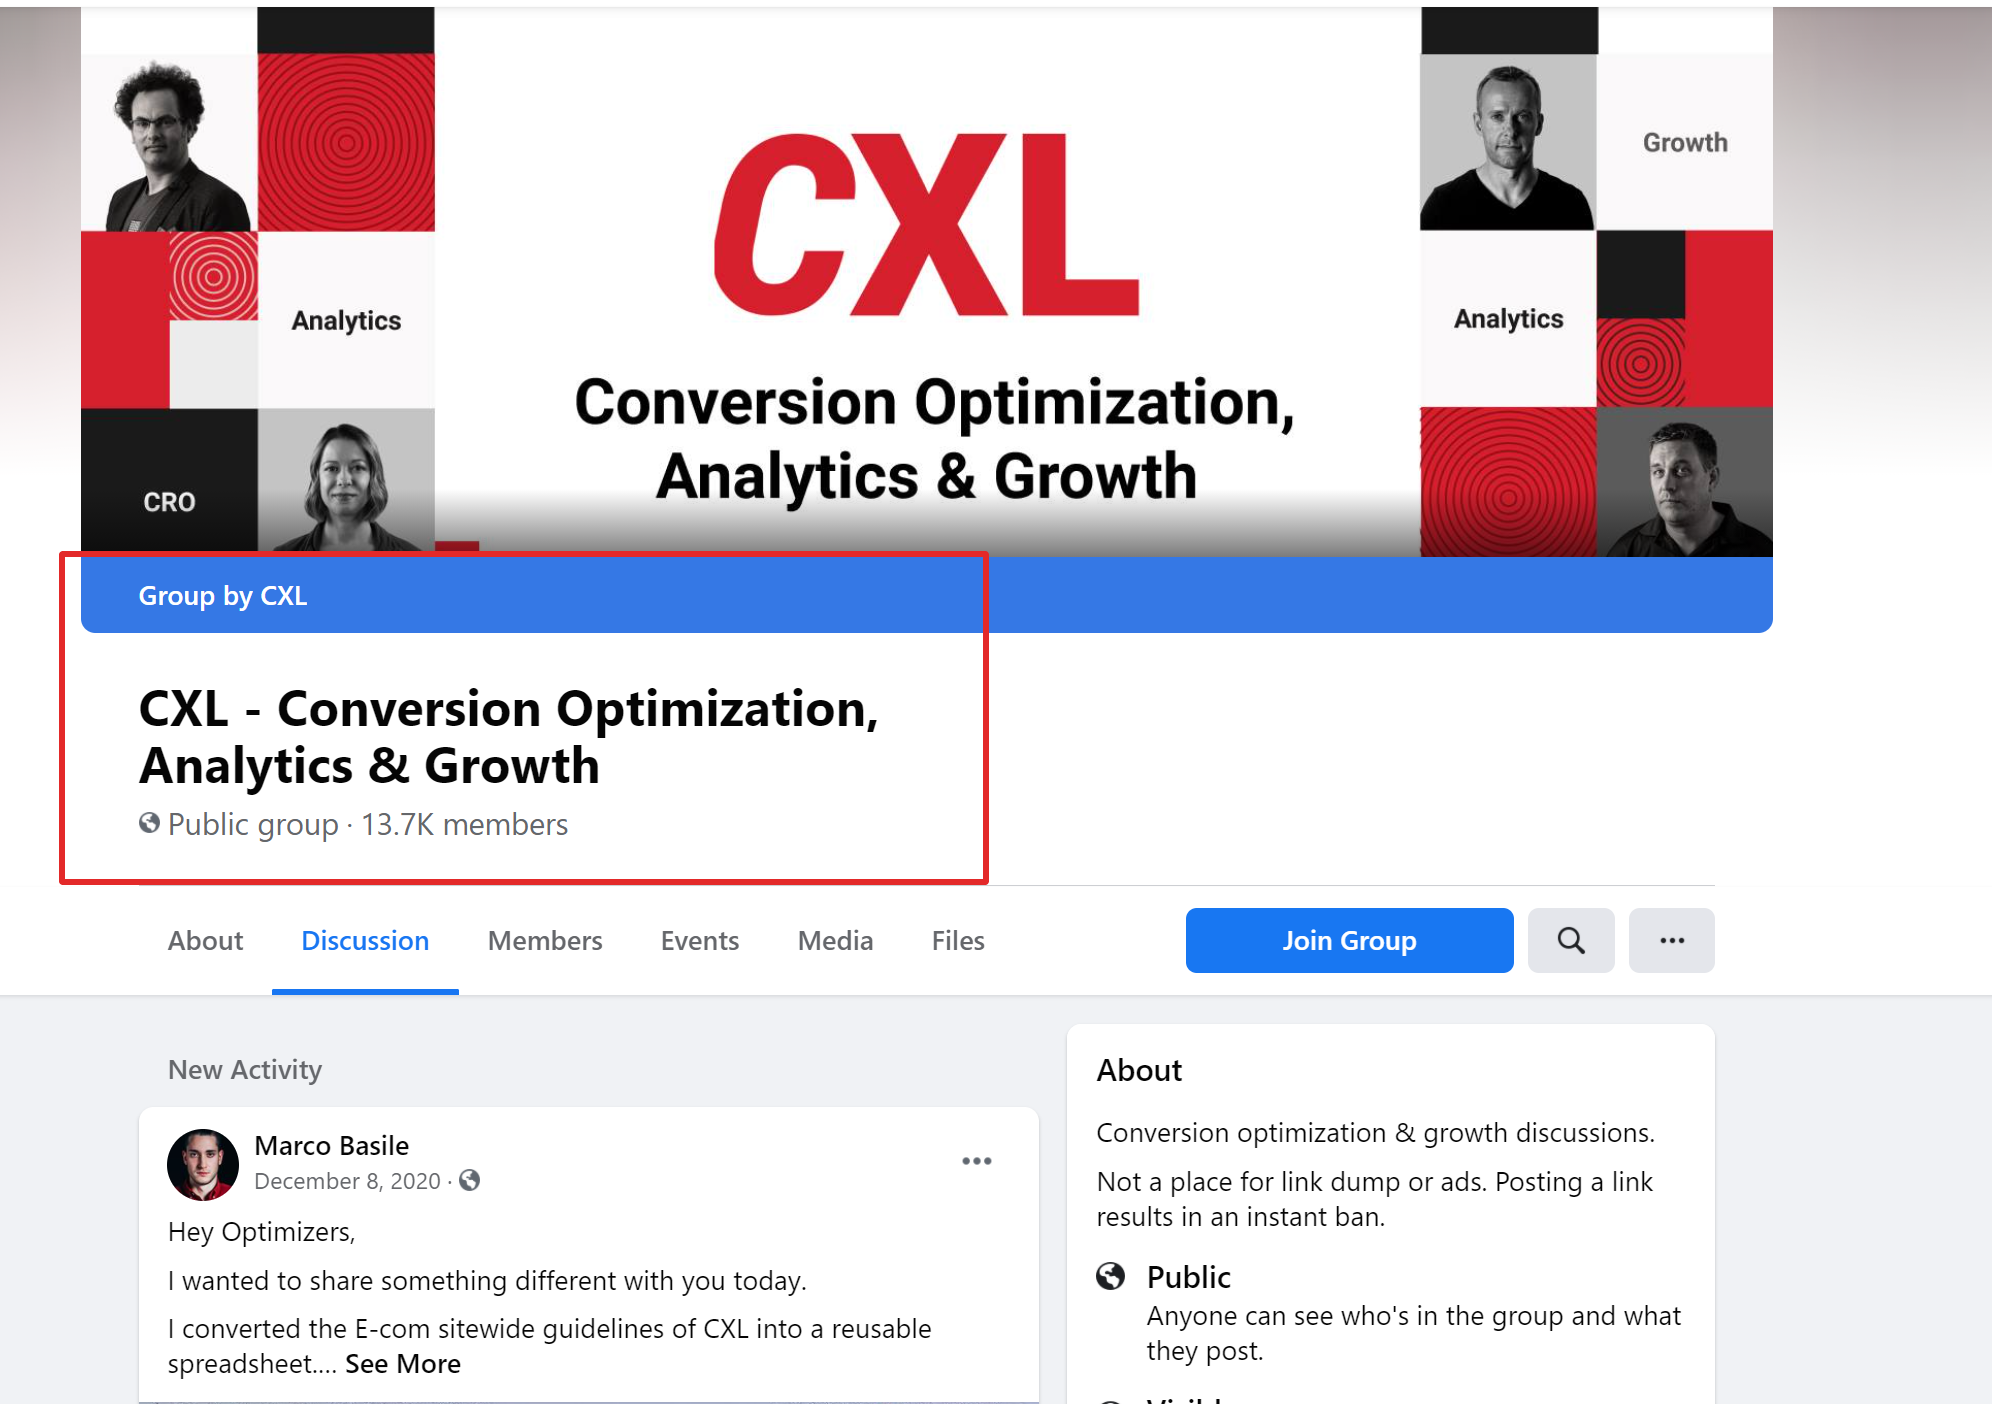 CXL - Conversion Optimization, Analytics & Growth